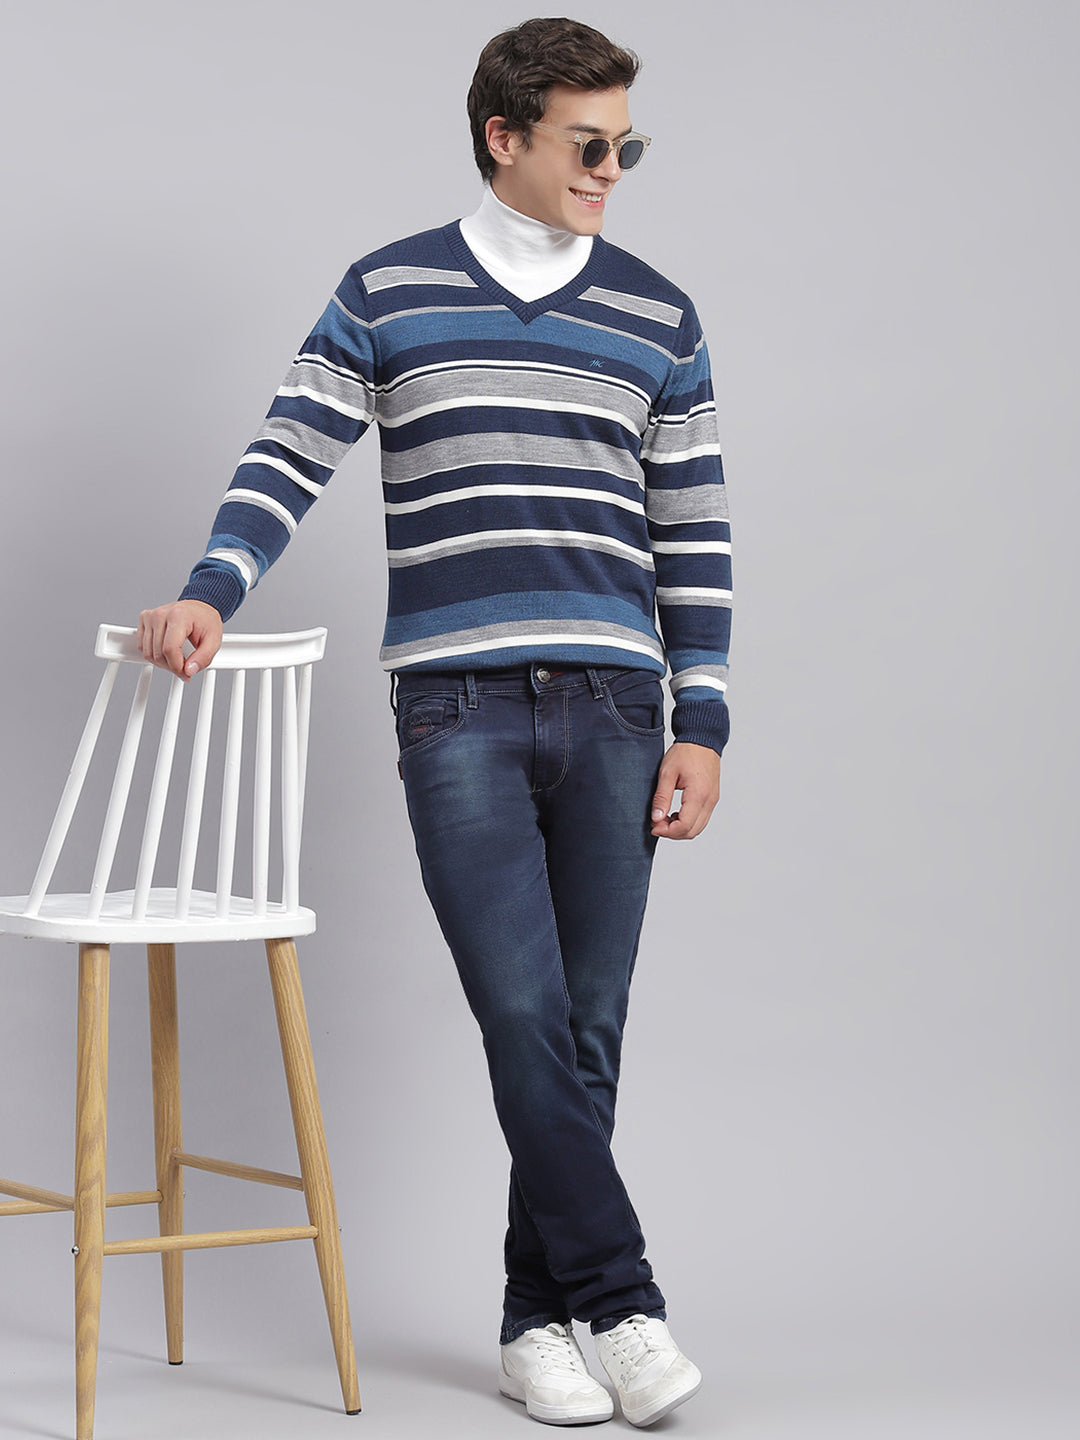 Buy Sweaters For Men Online - Woolen Sweaters For Gents - Monte Carlo